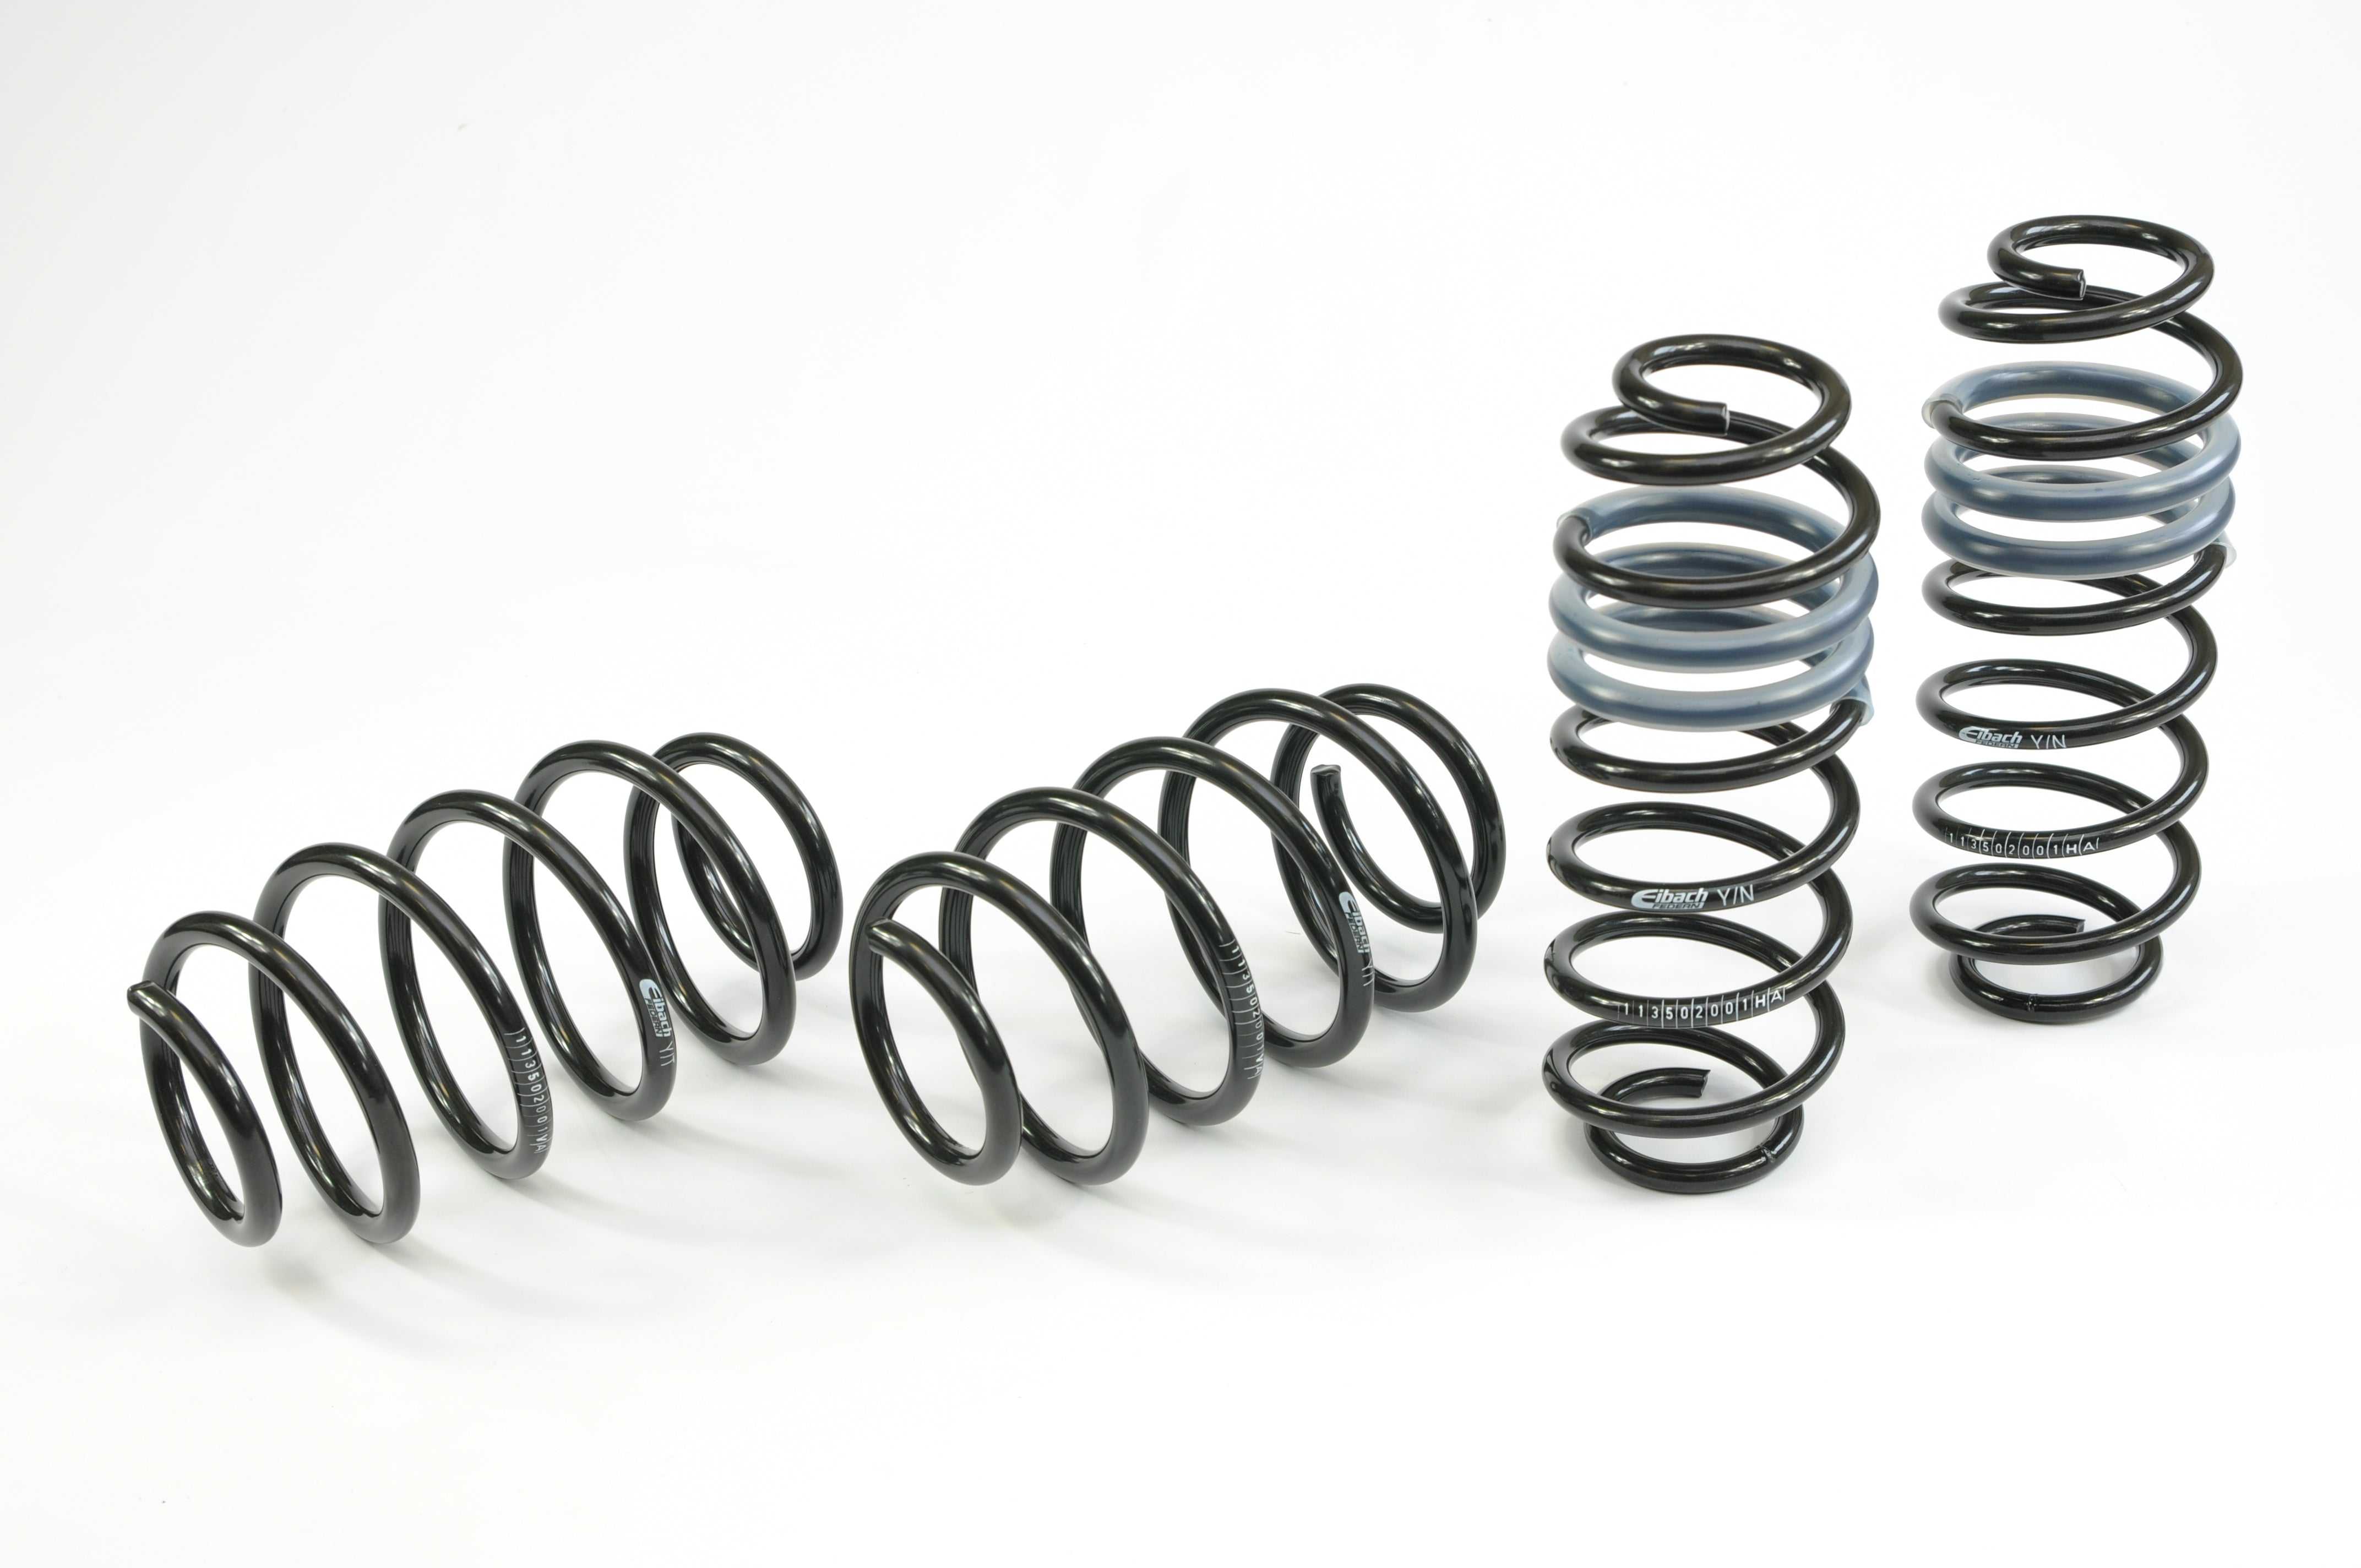 Eibach, Eibach Pro-Kit lowering springs for Fiesta MK7 Various Engine Sizes